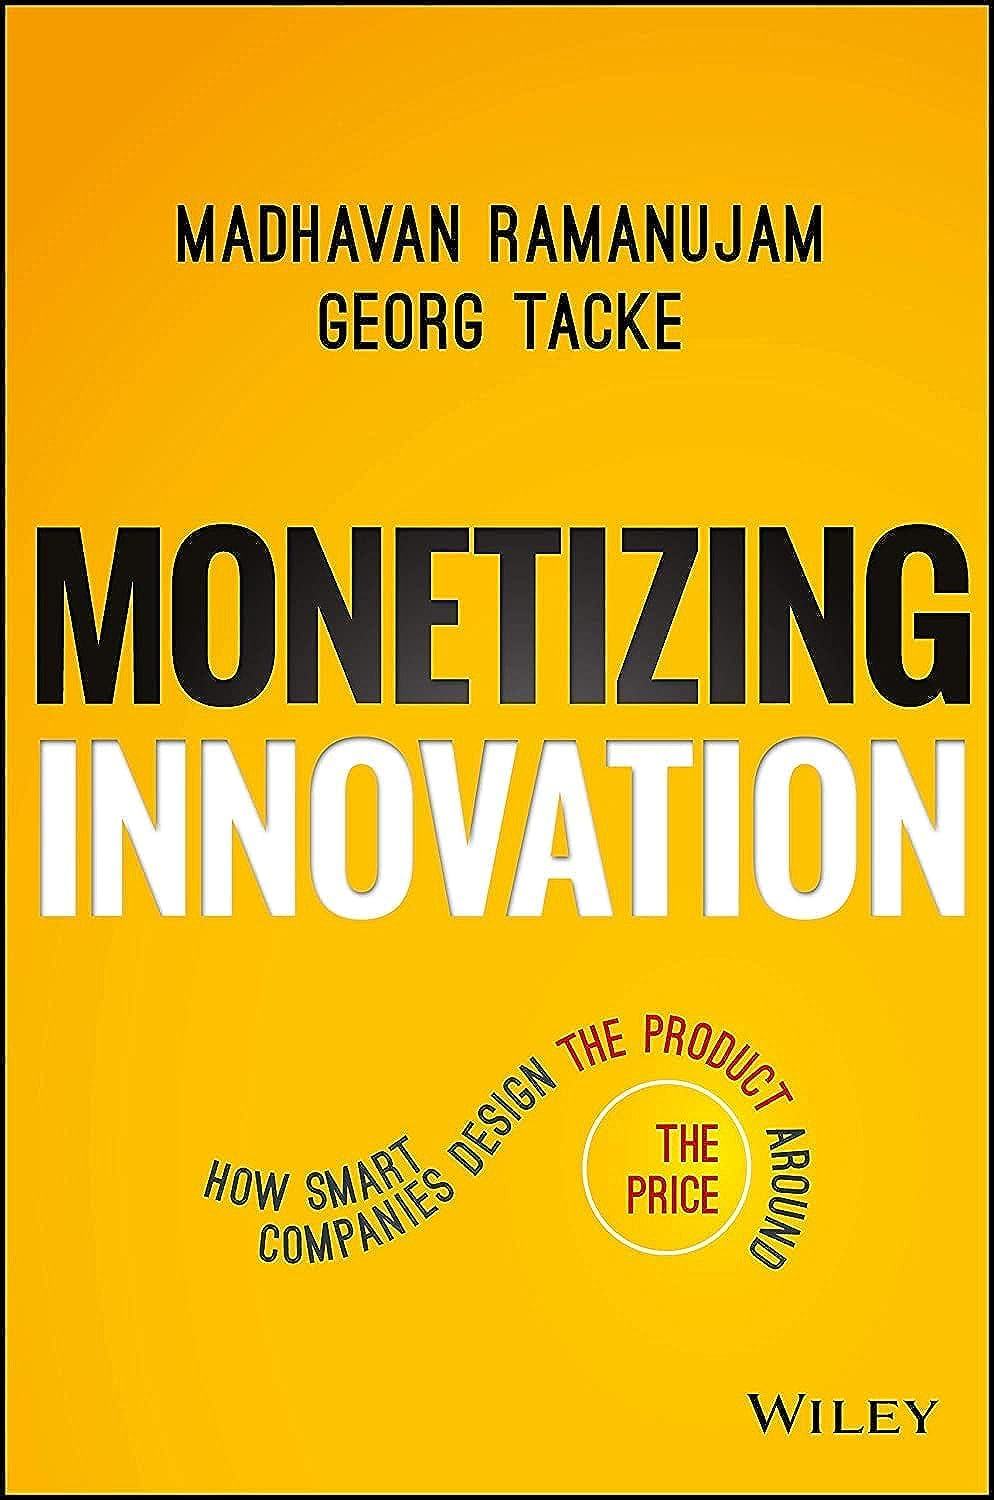 Madhavan Ramanujam, Georg Tacke:</b> Monetizing Innovation